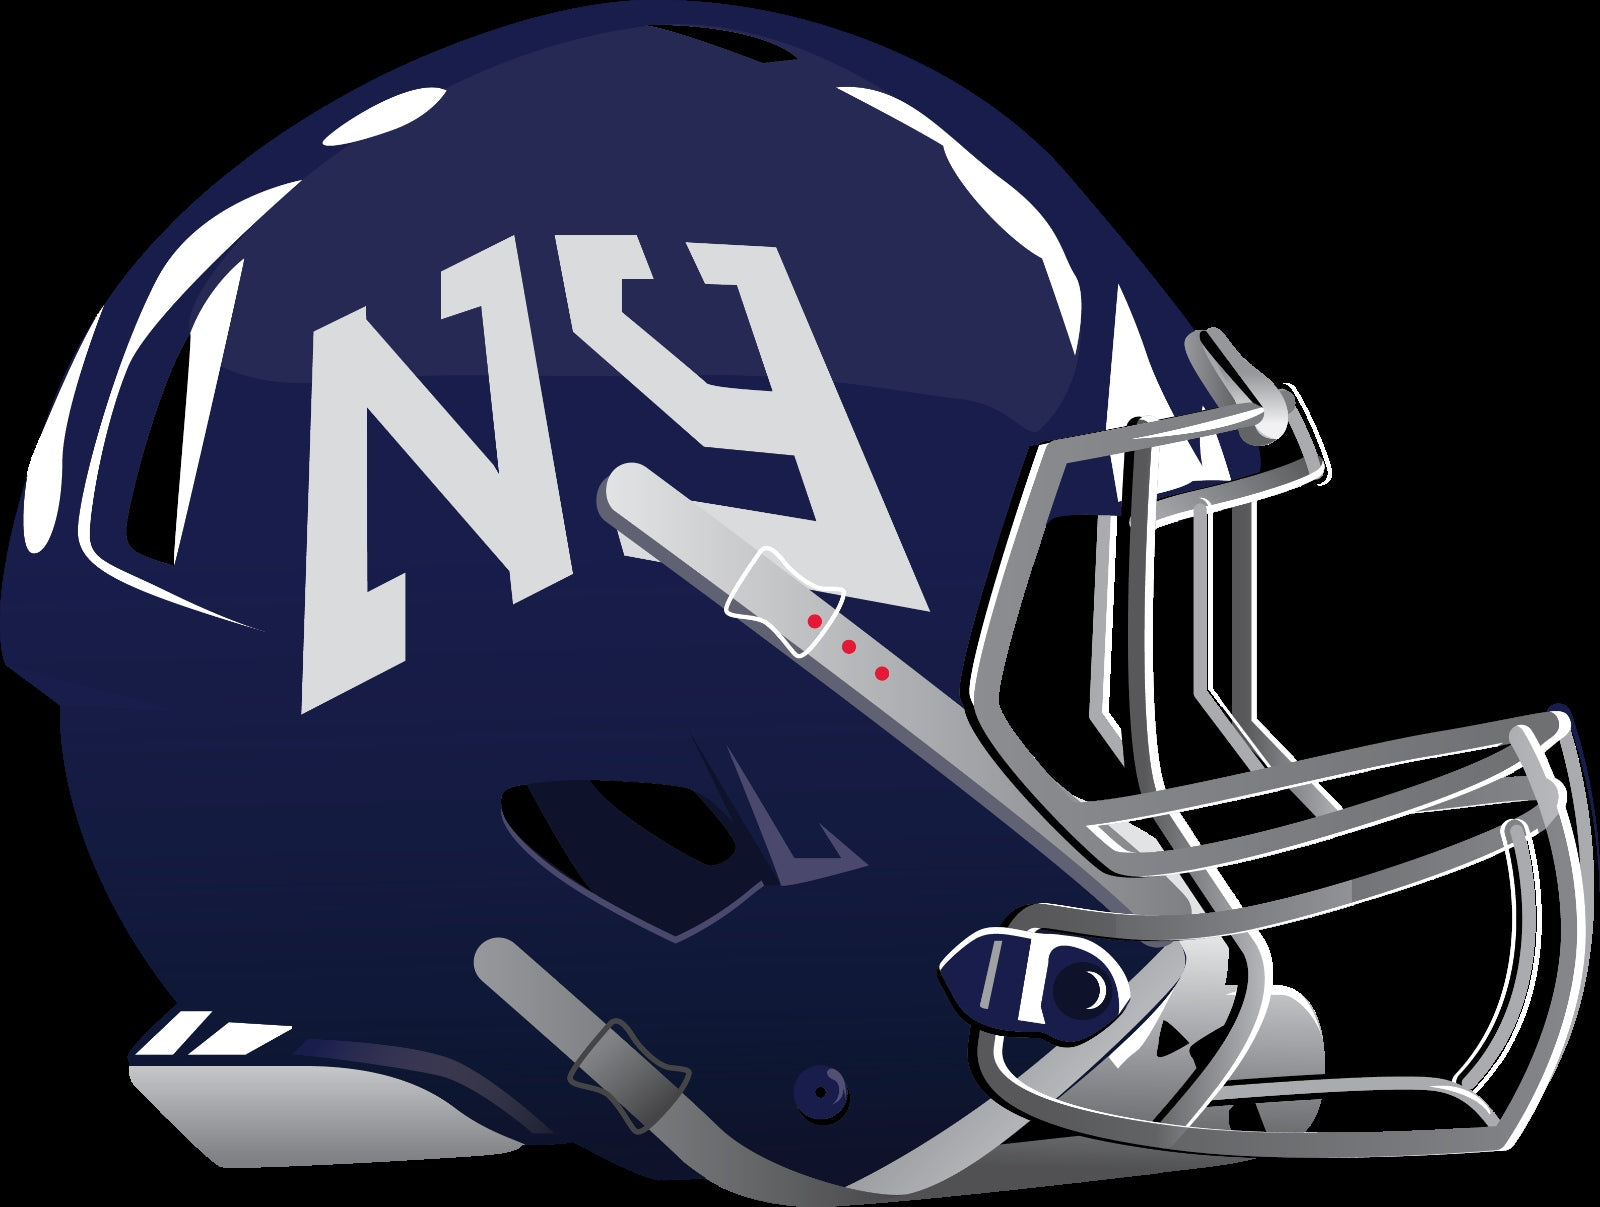 New York Giants Alternate Future Helmet logo Vinyl Decal / Sticker